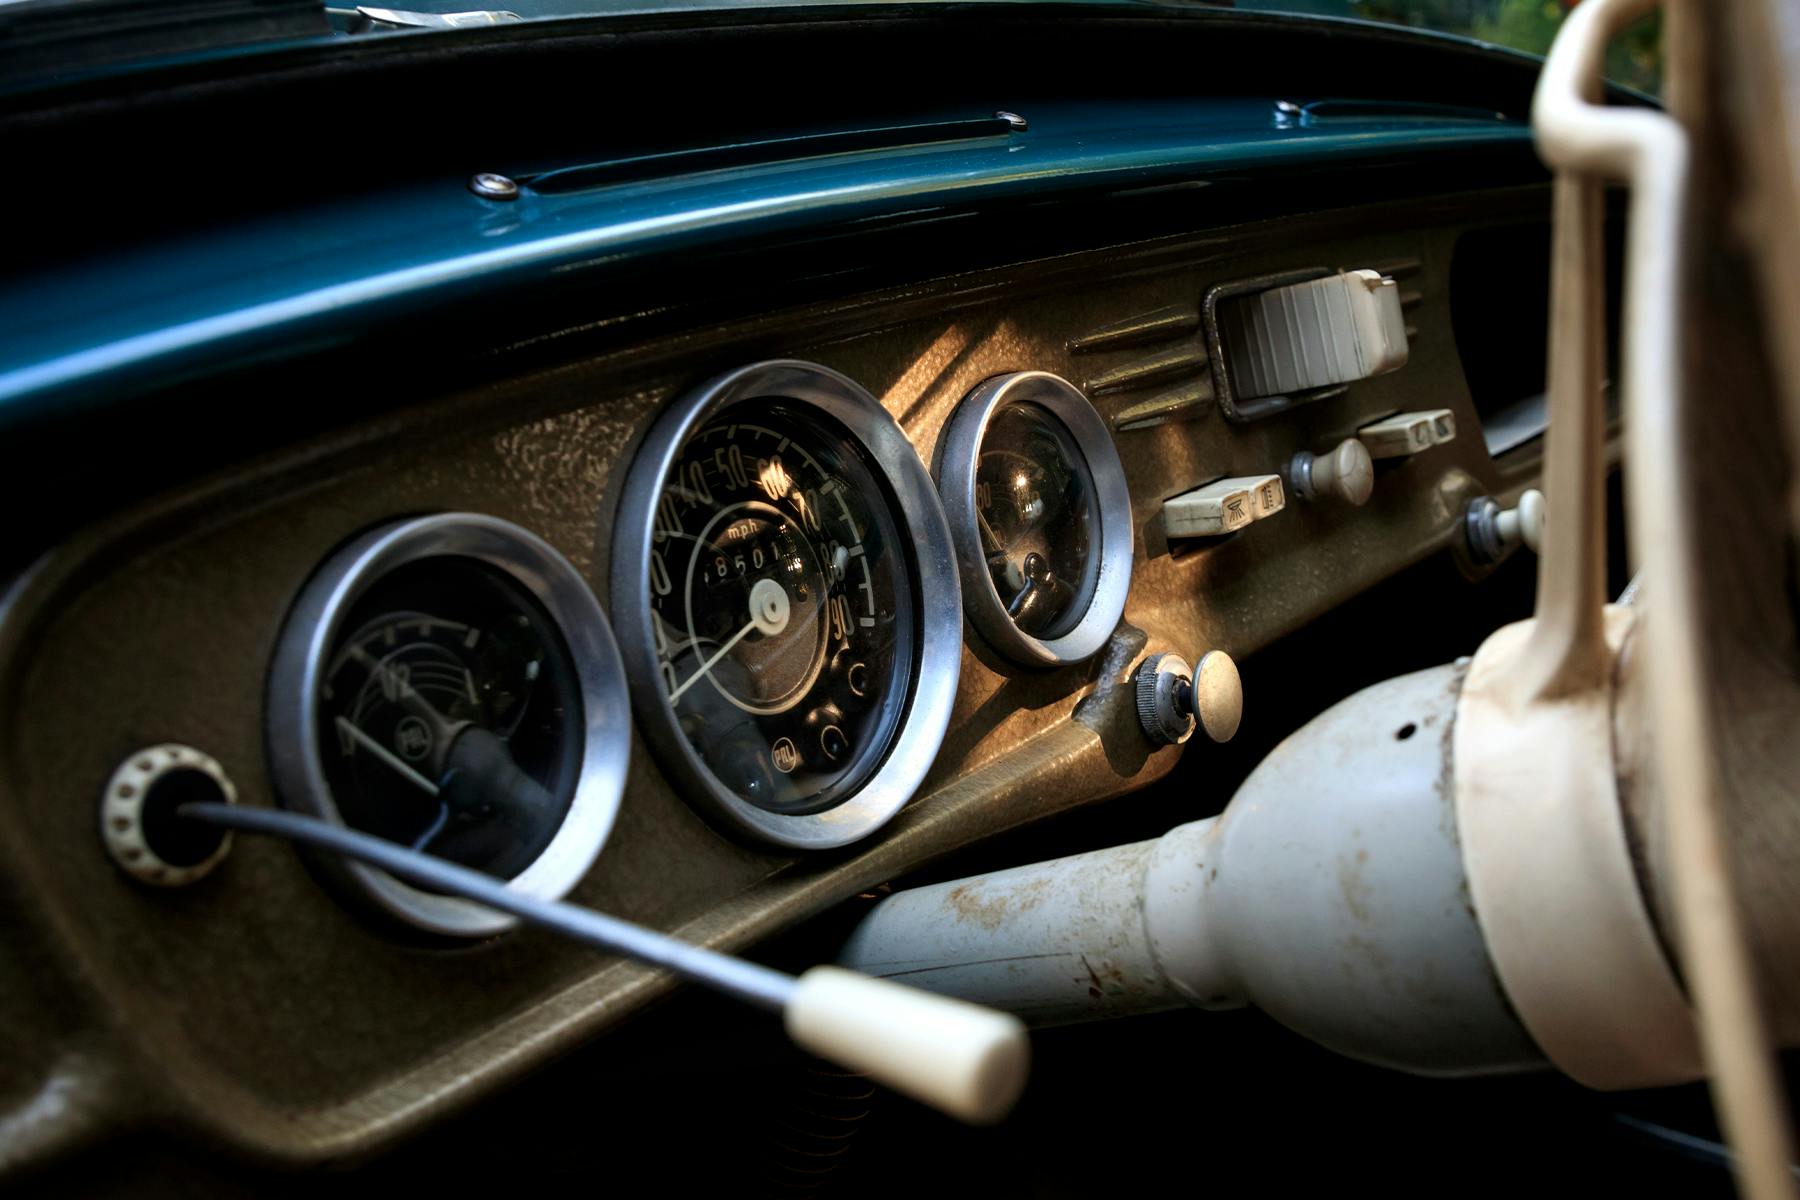 1960 Skoda Octavia dash gauges